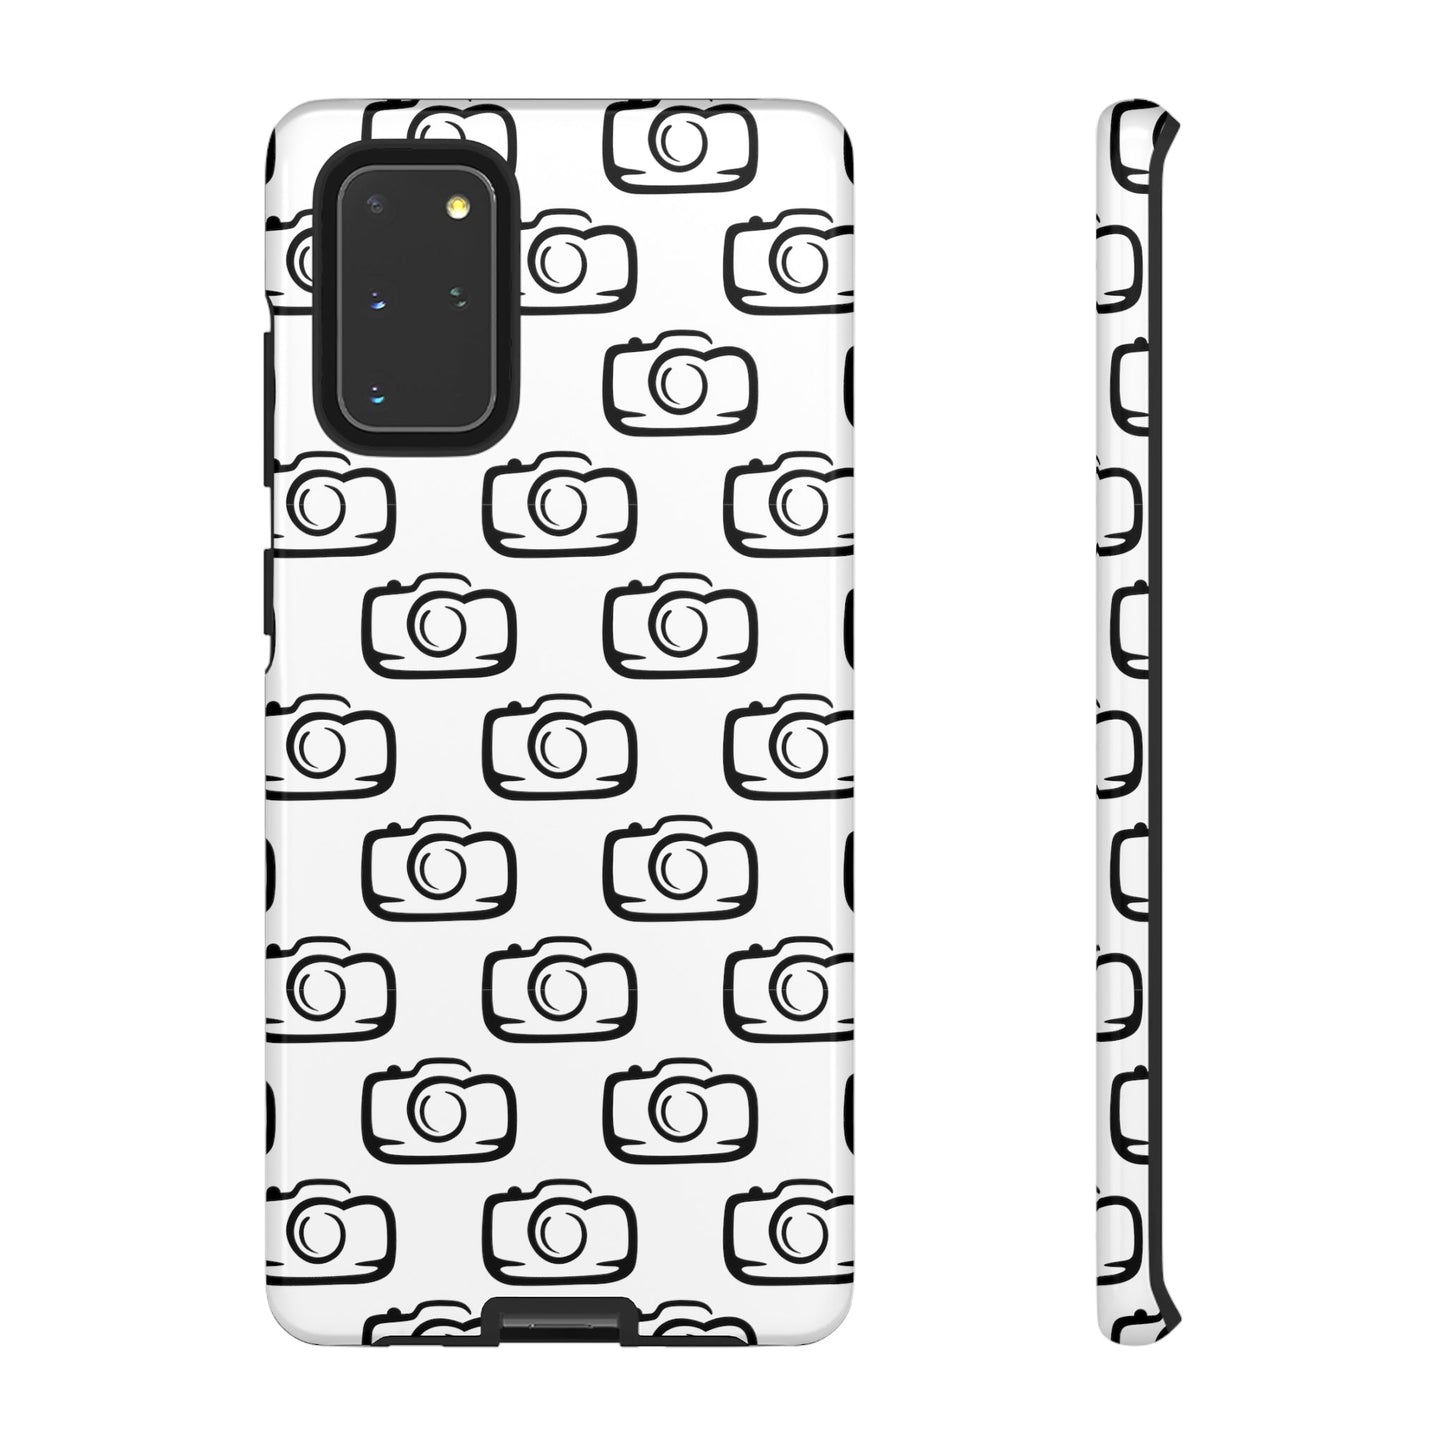 Phone case fits iPhone Samsung Galaxy Google Pixel - Photographer Phone Case - Cheerful Lane